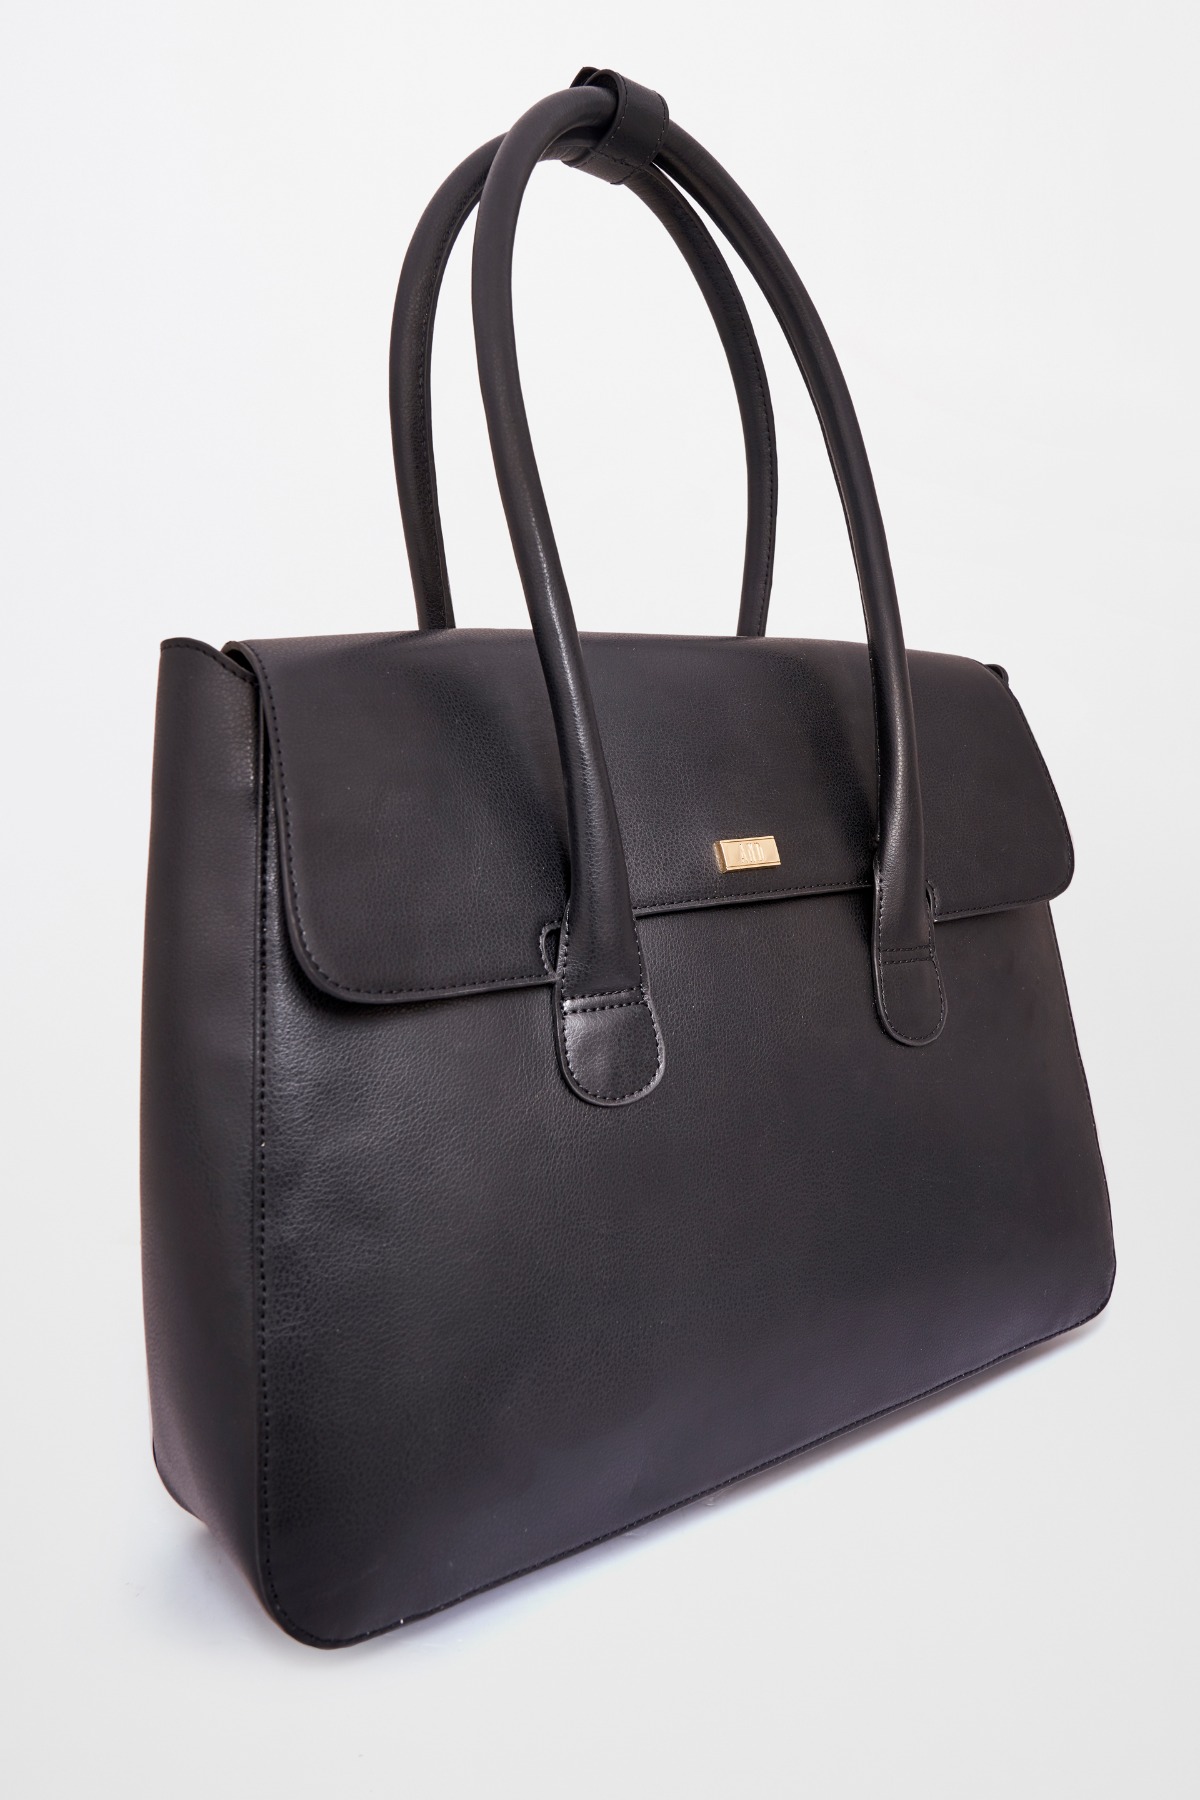 1 - Black Handbag, image 2